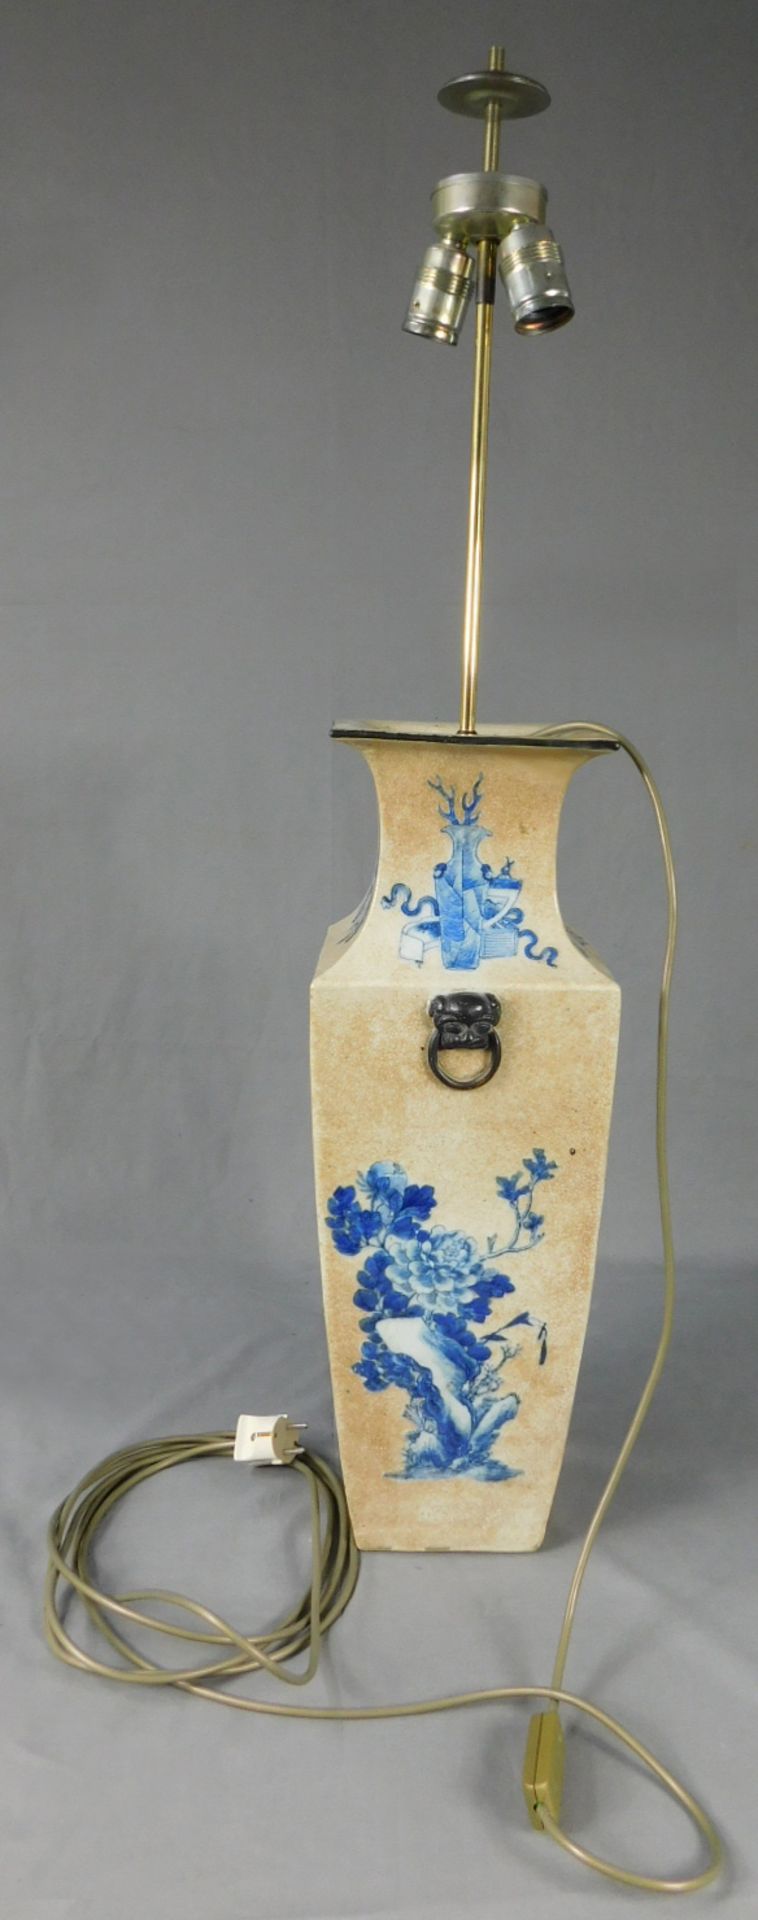 China Lampe. - Image 26 of 34